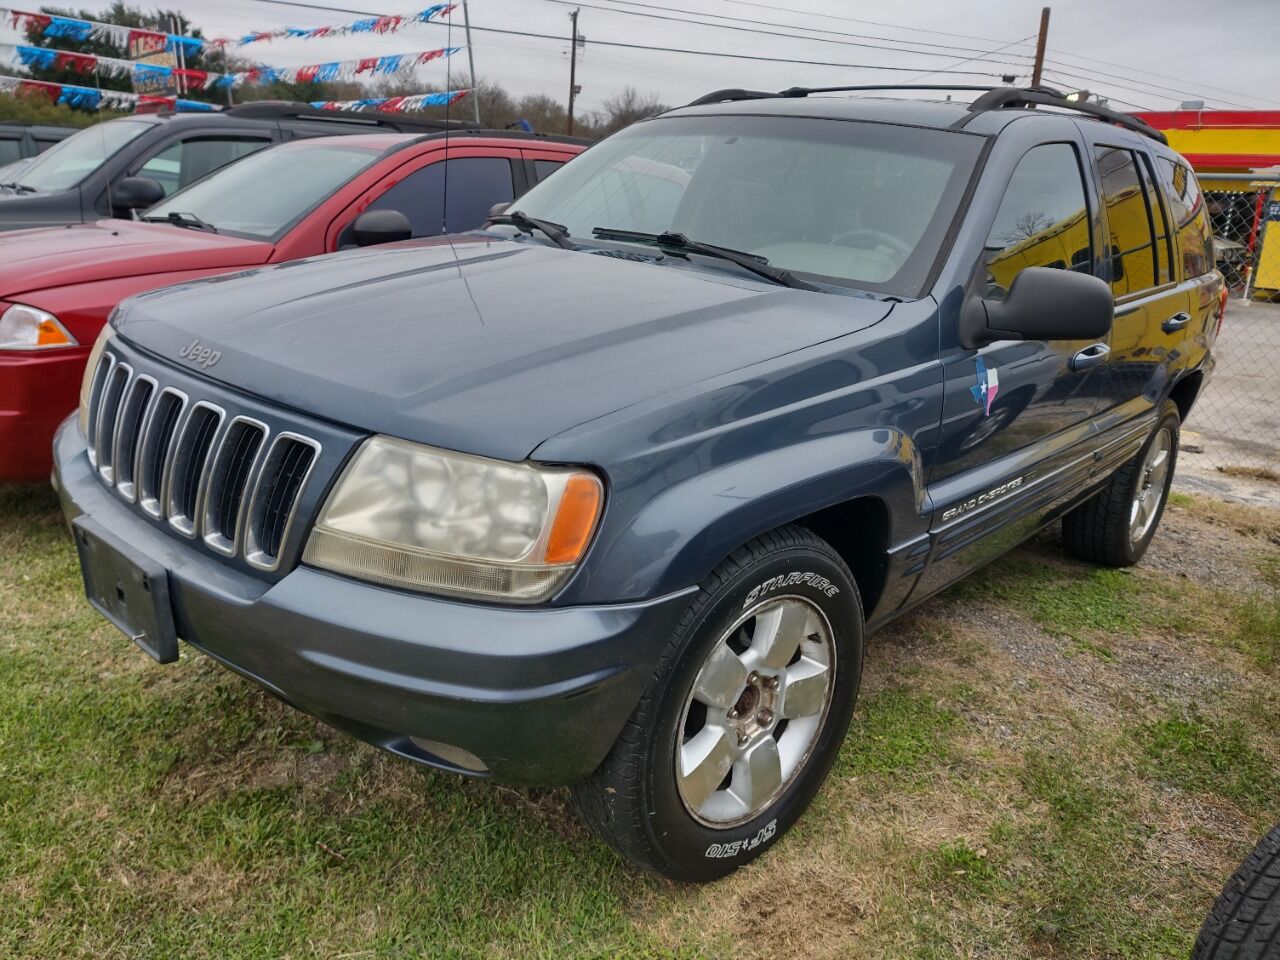 2001 Jeep Grand Cherokee For Sale In Selma, TX